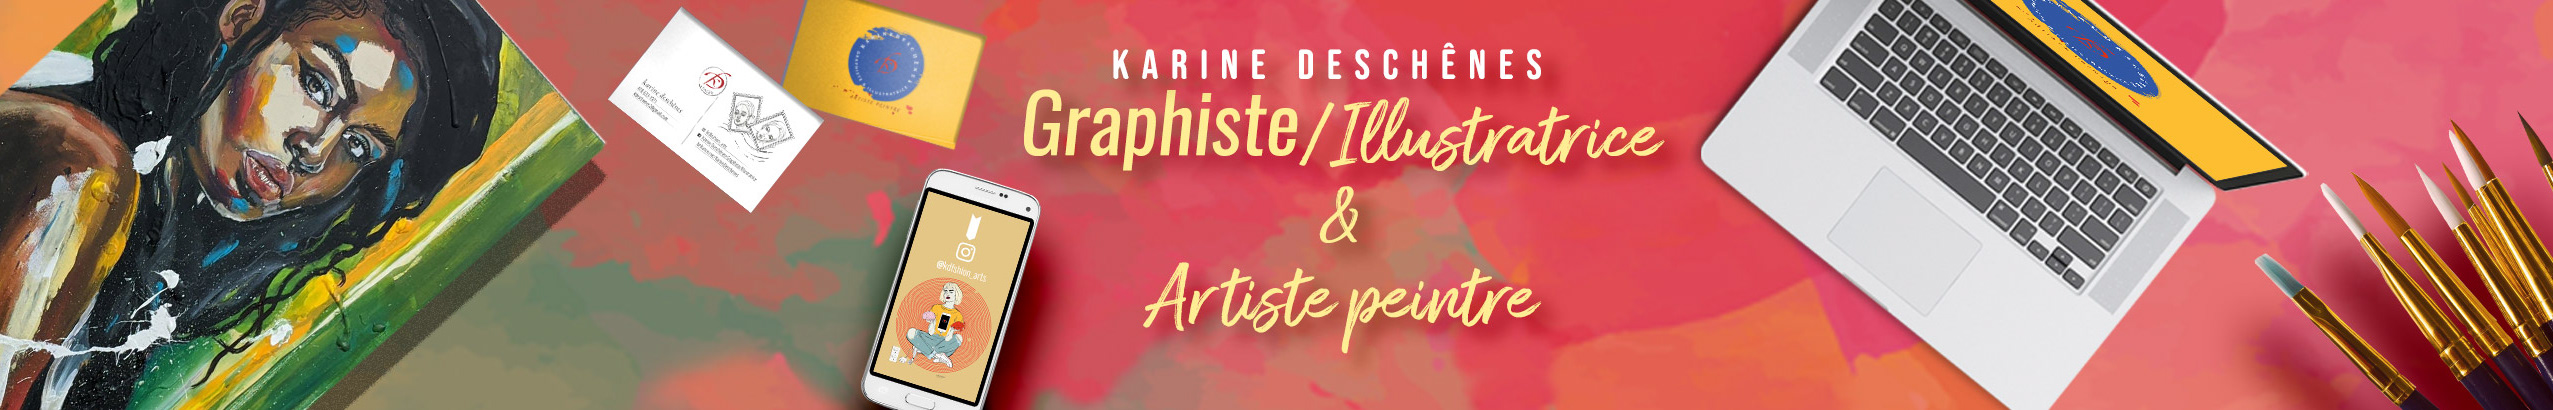 Karine Deschênes's profile banner